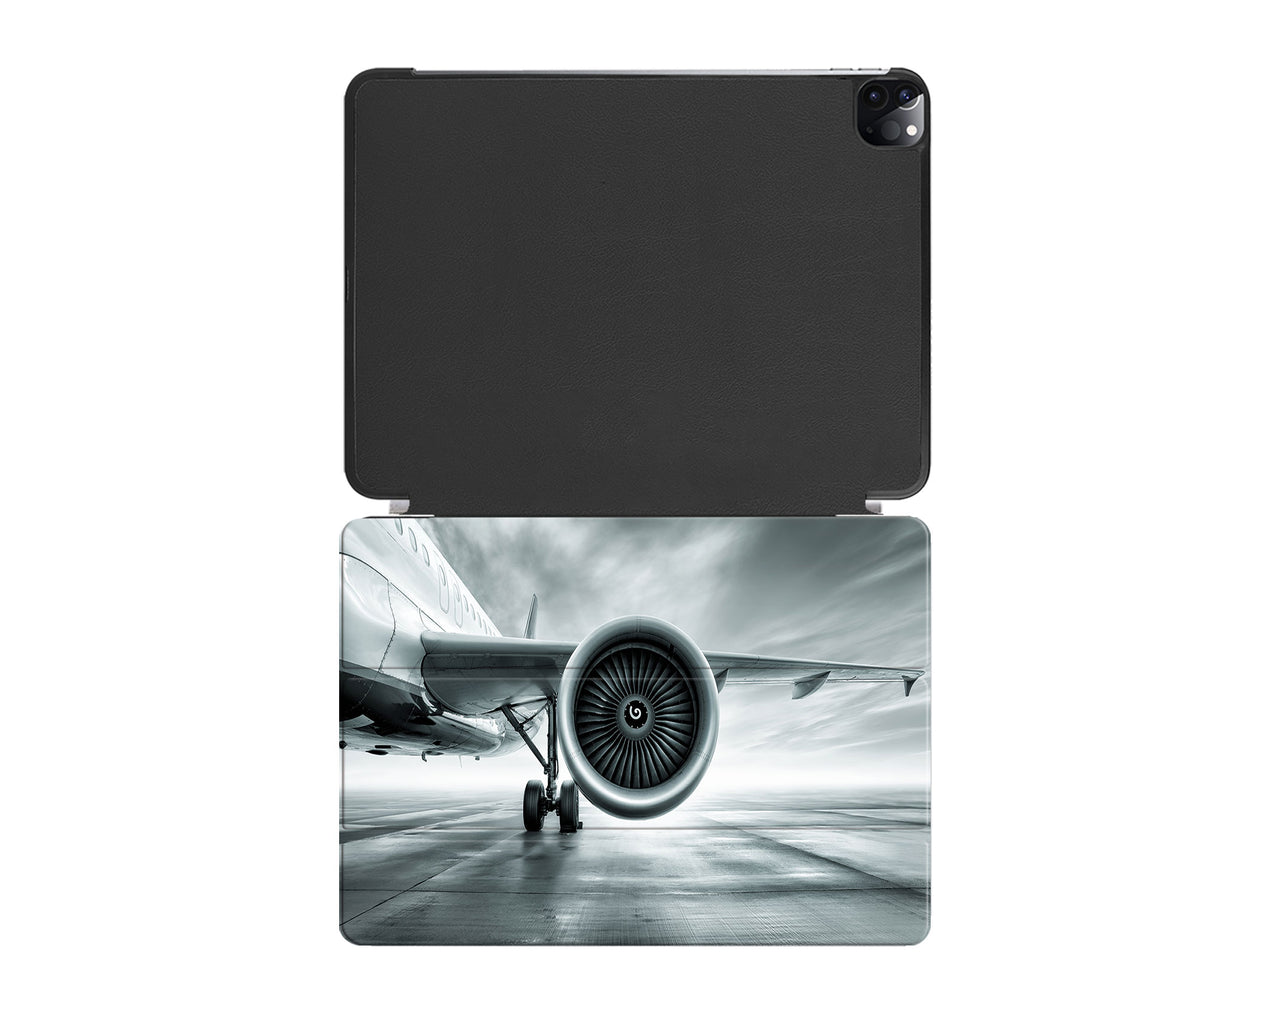 Super Cool Airliner Jet Engine Designed iPad Cases